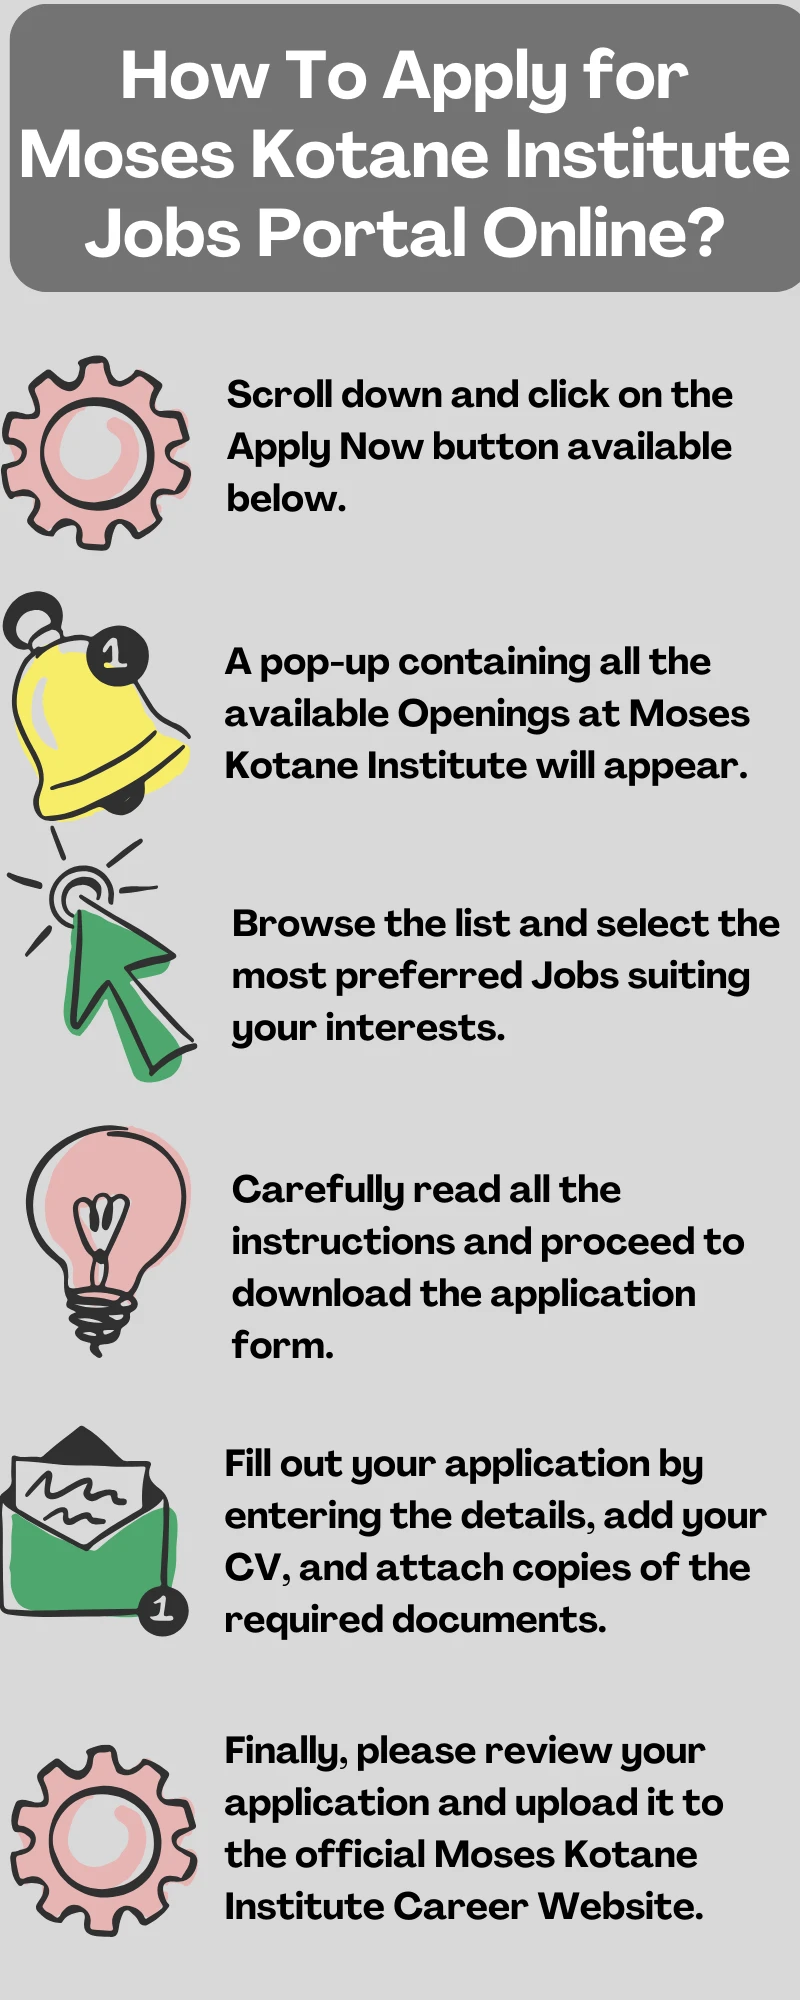 How To Apply for Moses Kotane Institute Jobs Portal Online?